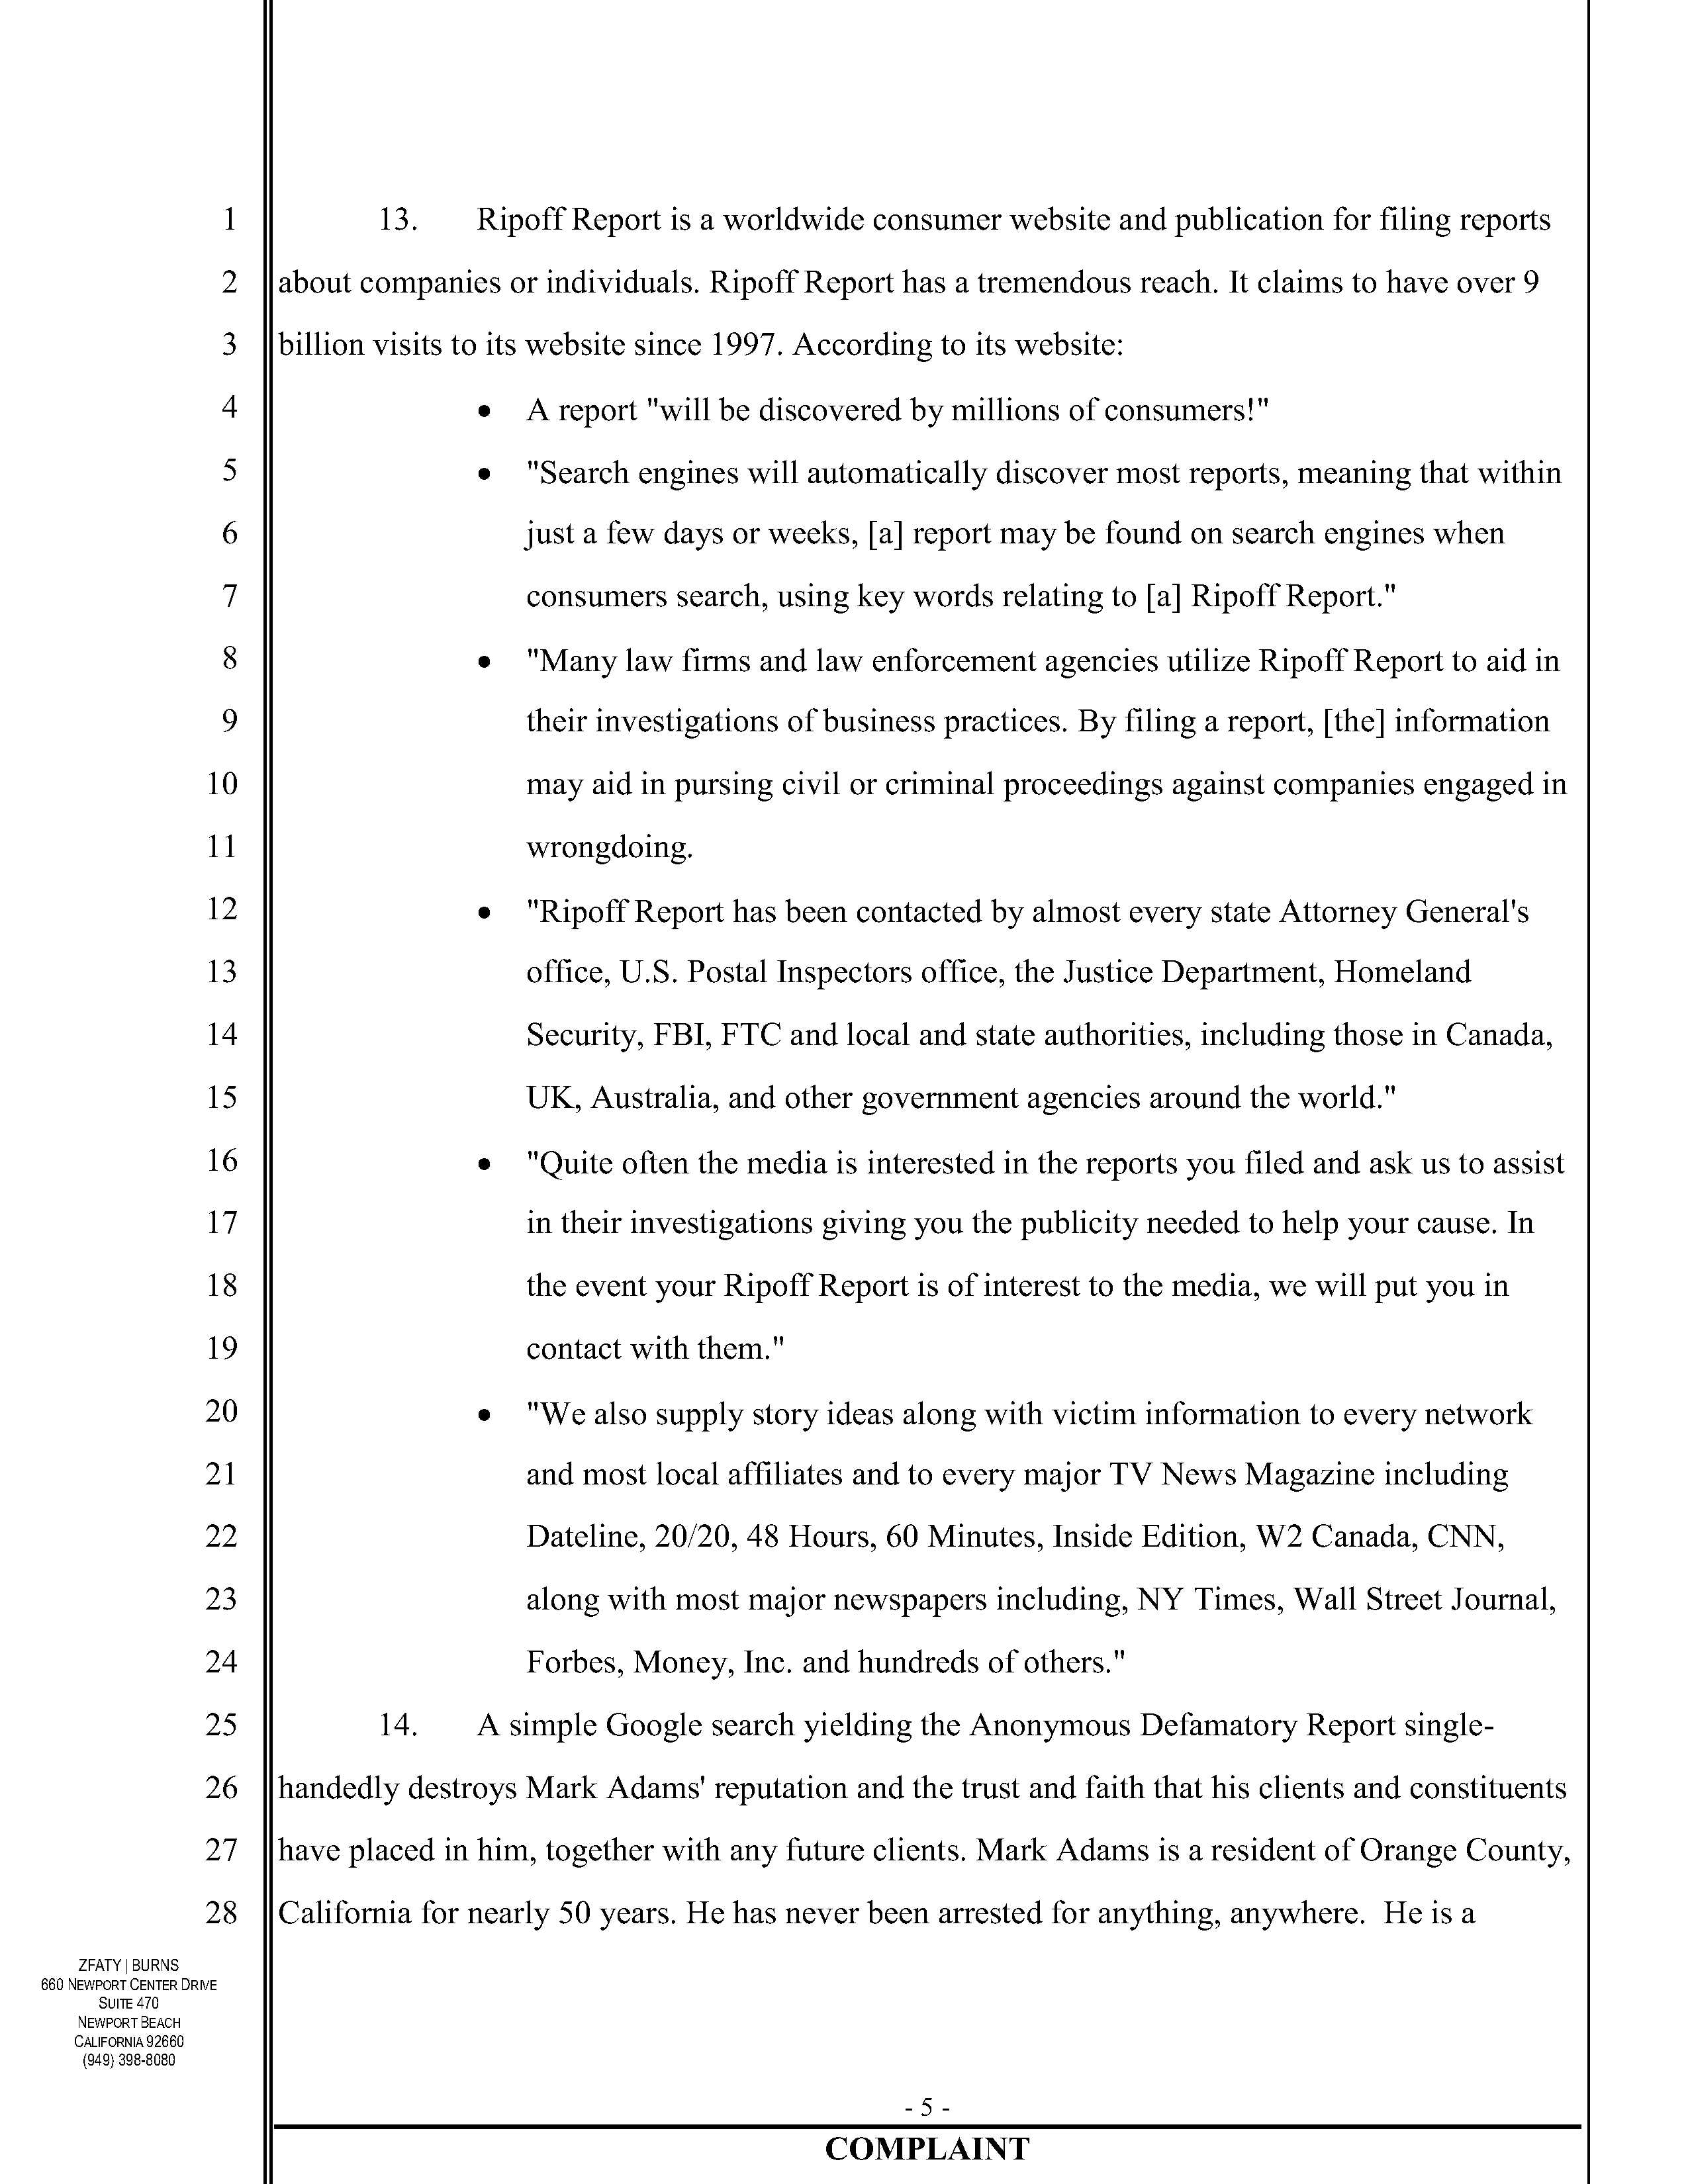 Court Conformed Copy of Complaint, page 6